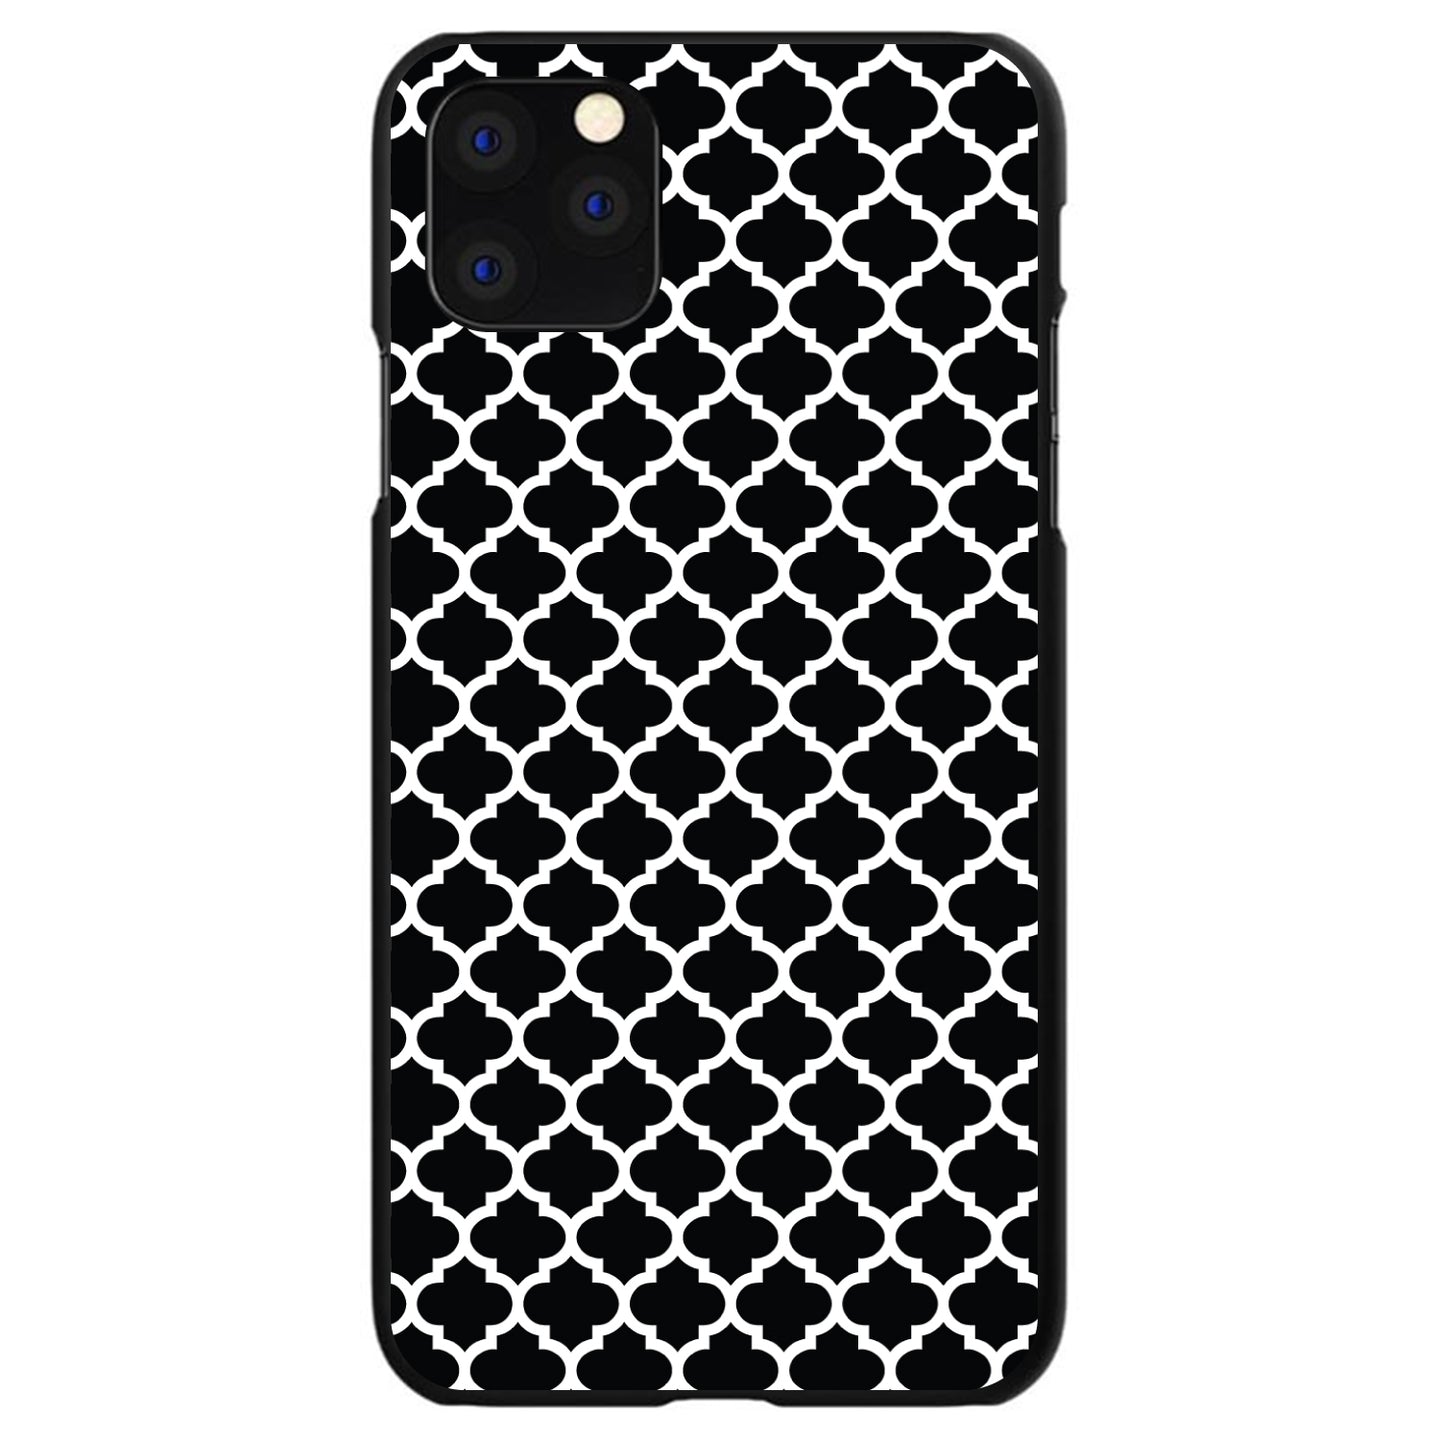 DistinctInk® Hard Plastic Snap-On Case for Apple iPhone or Samsung Galaxy - Black White Moroccan Lattice